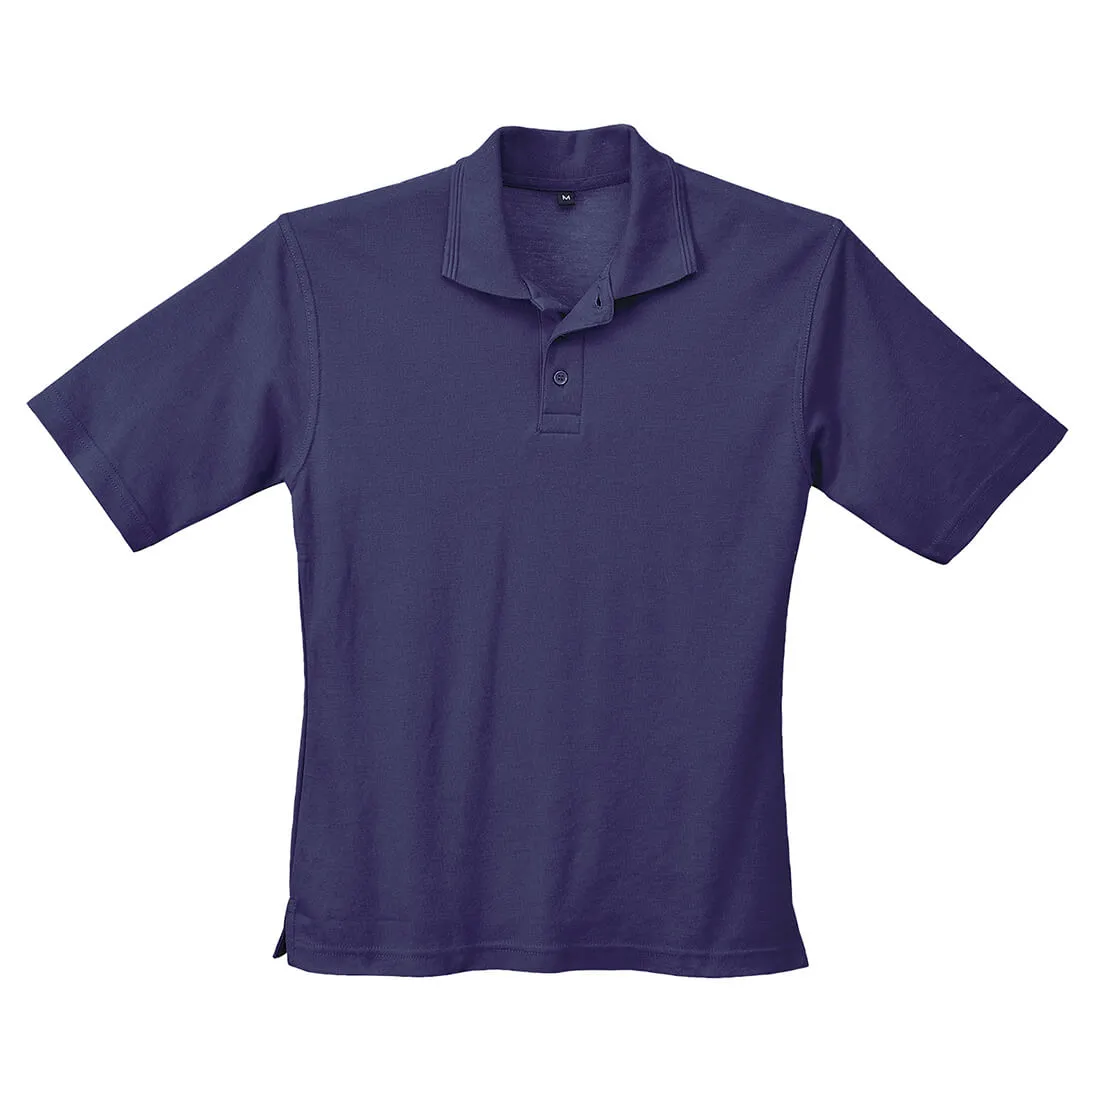 Portwest Ladies Naples Polo Shirt - Navy, XL